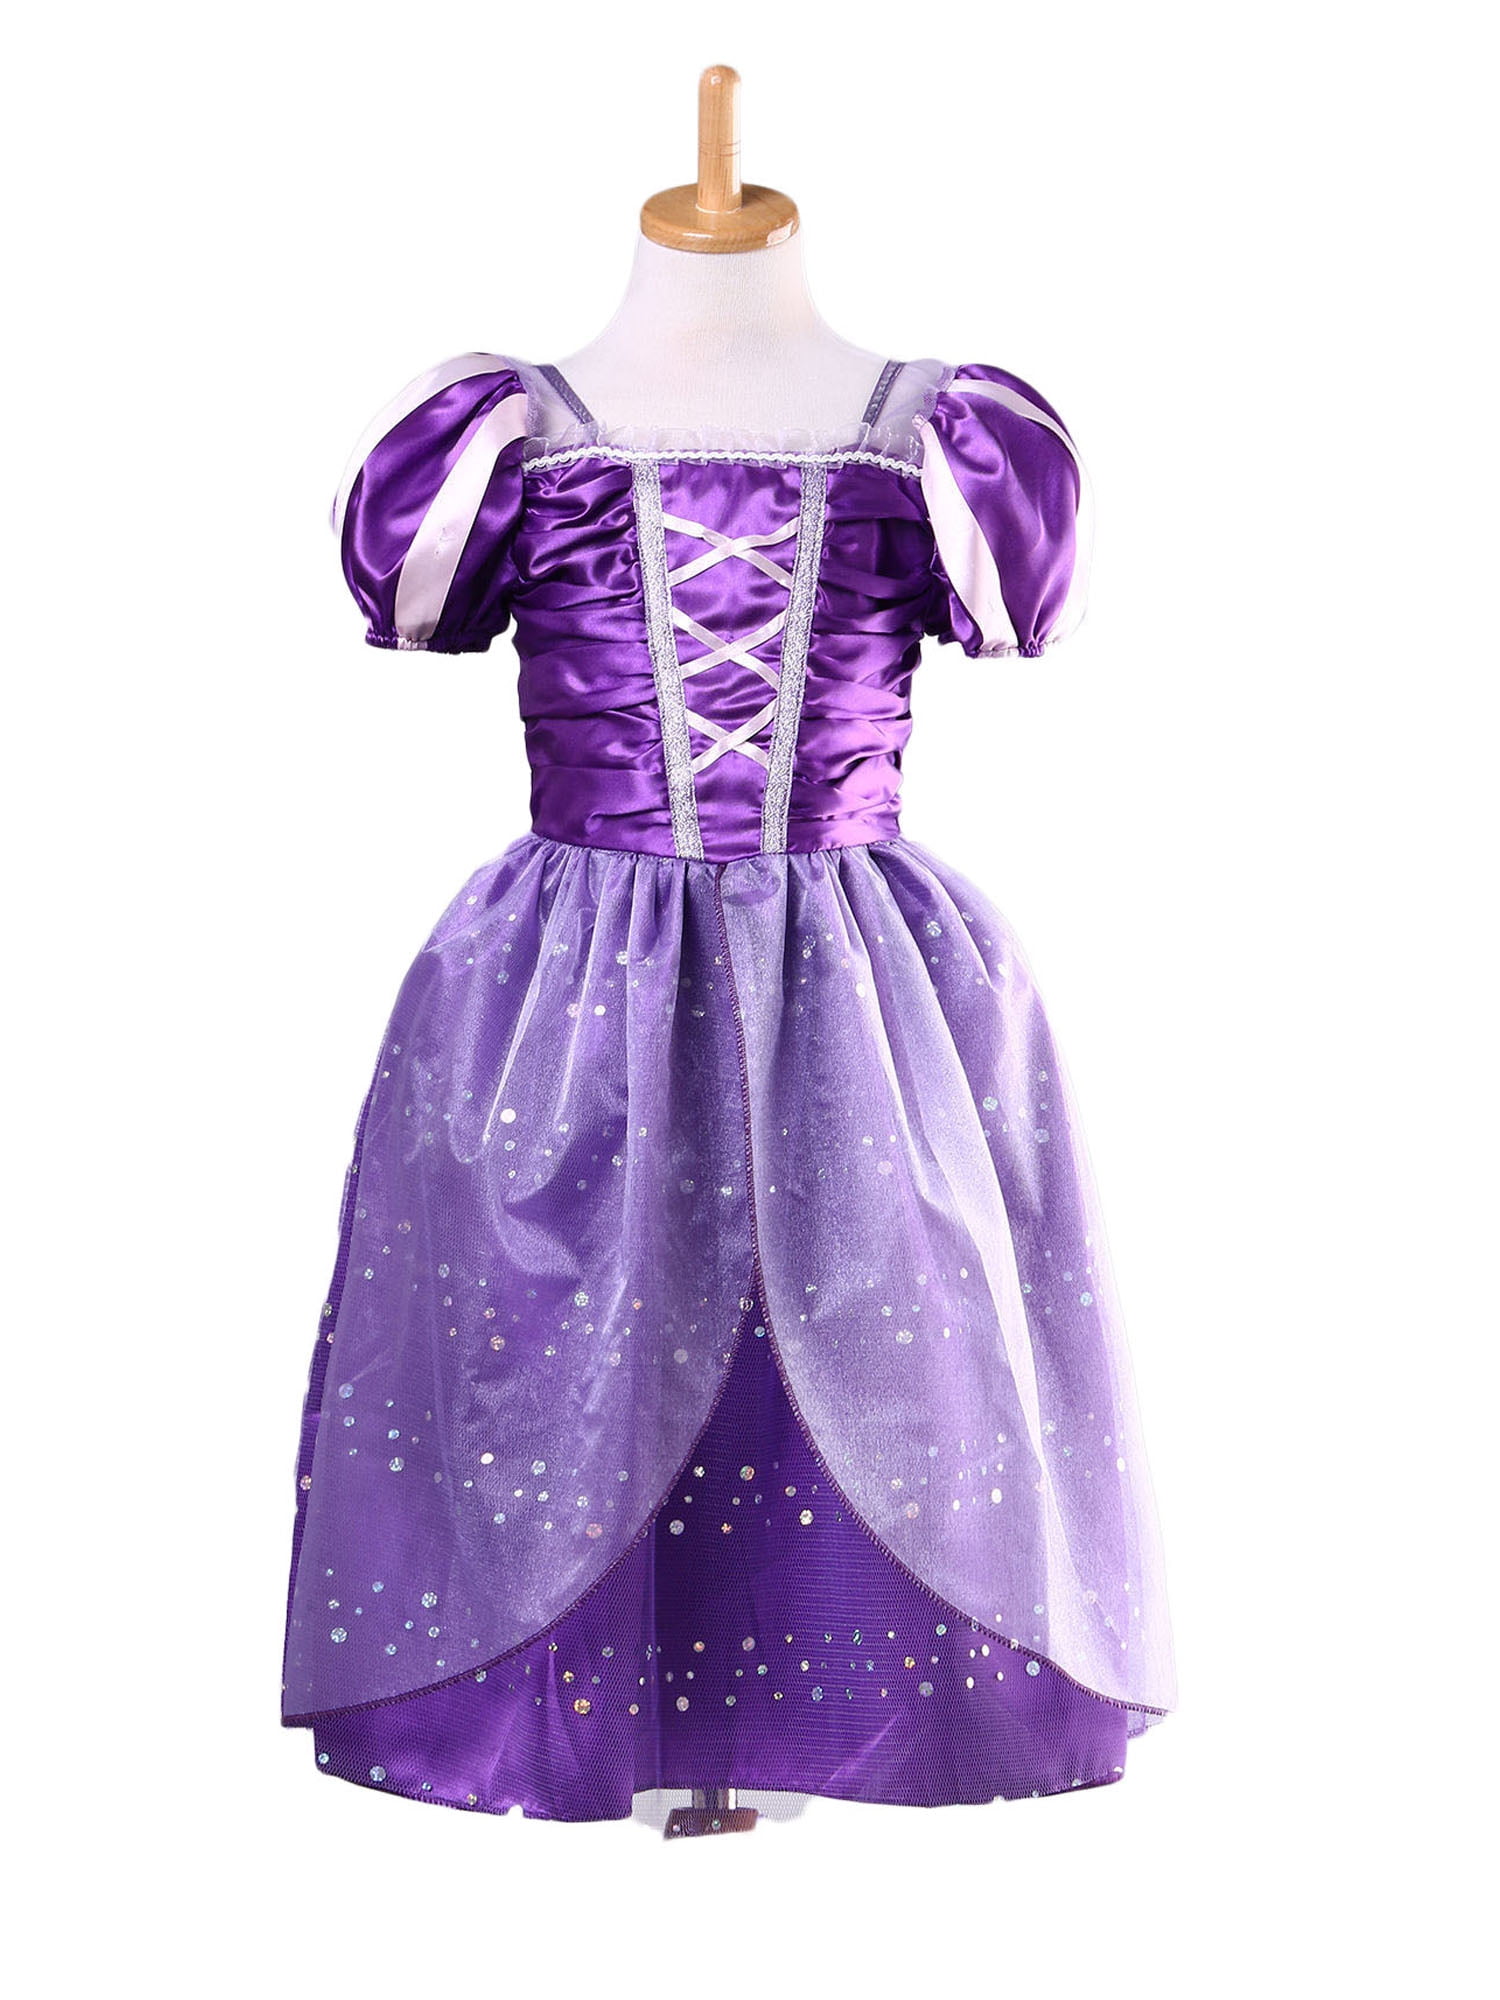 Dressy Daisy Girls Princess Mermaid Fairy Tales Costume Cosplay Fancy Dress Party